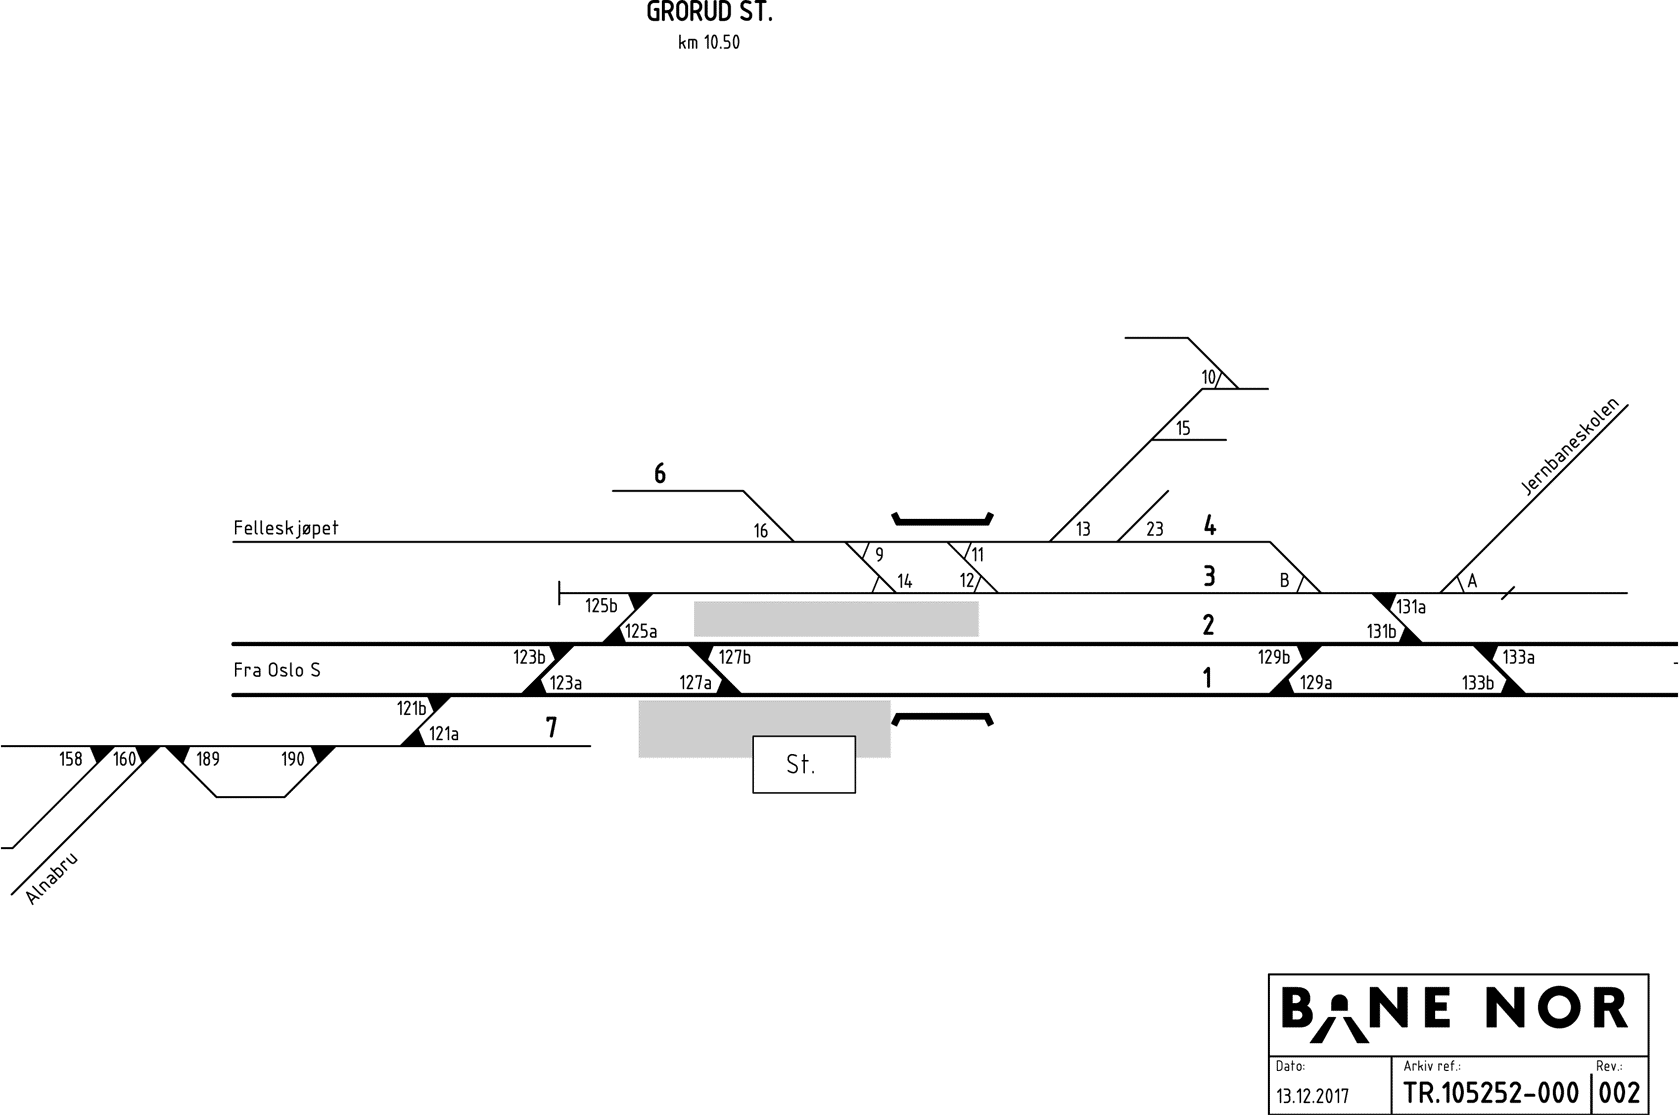 Track plan Grorud station